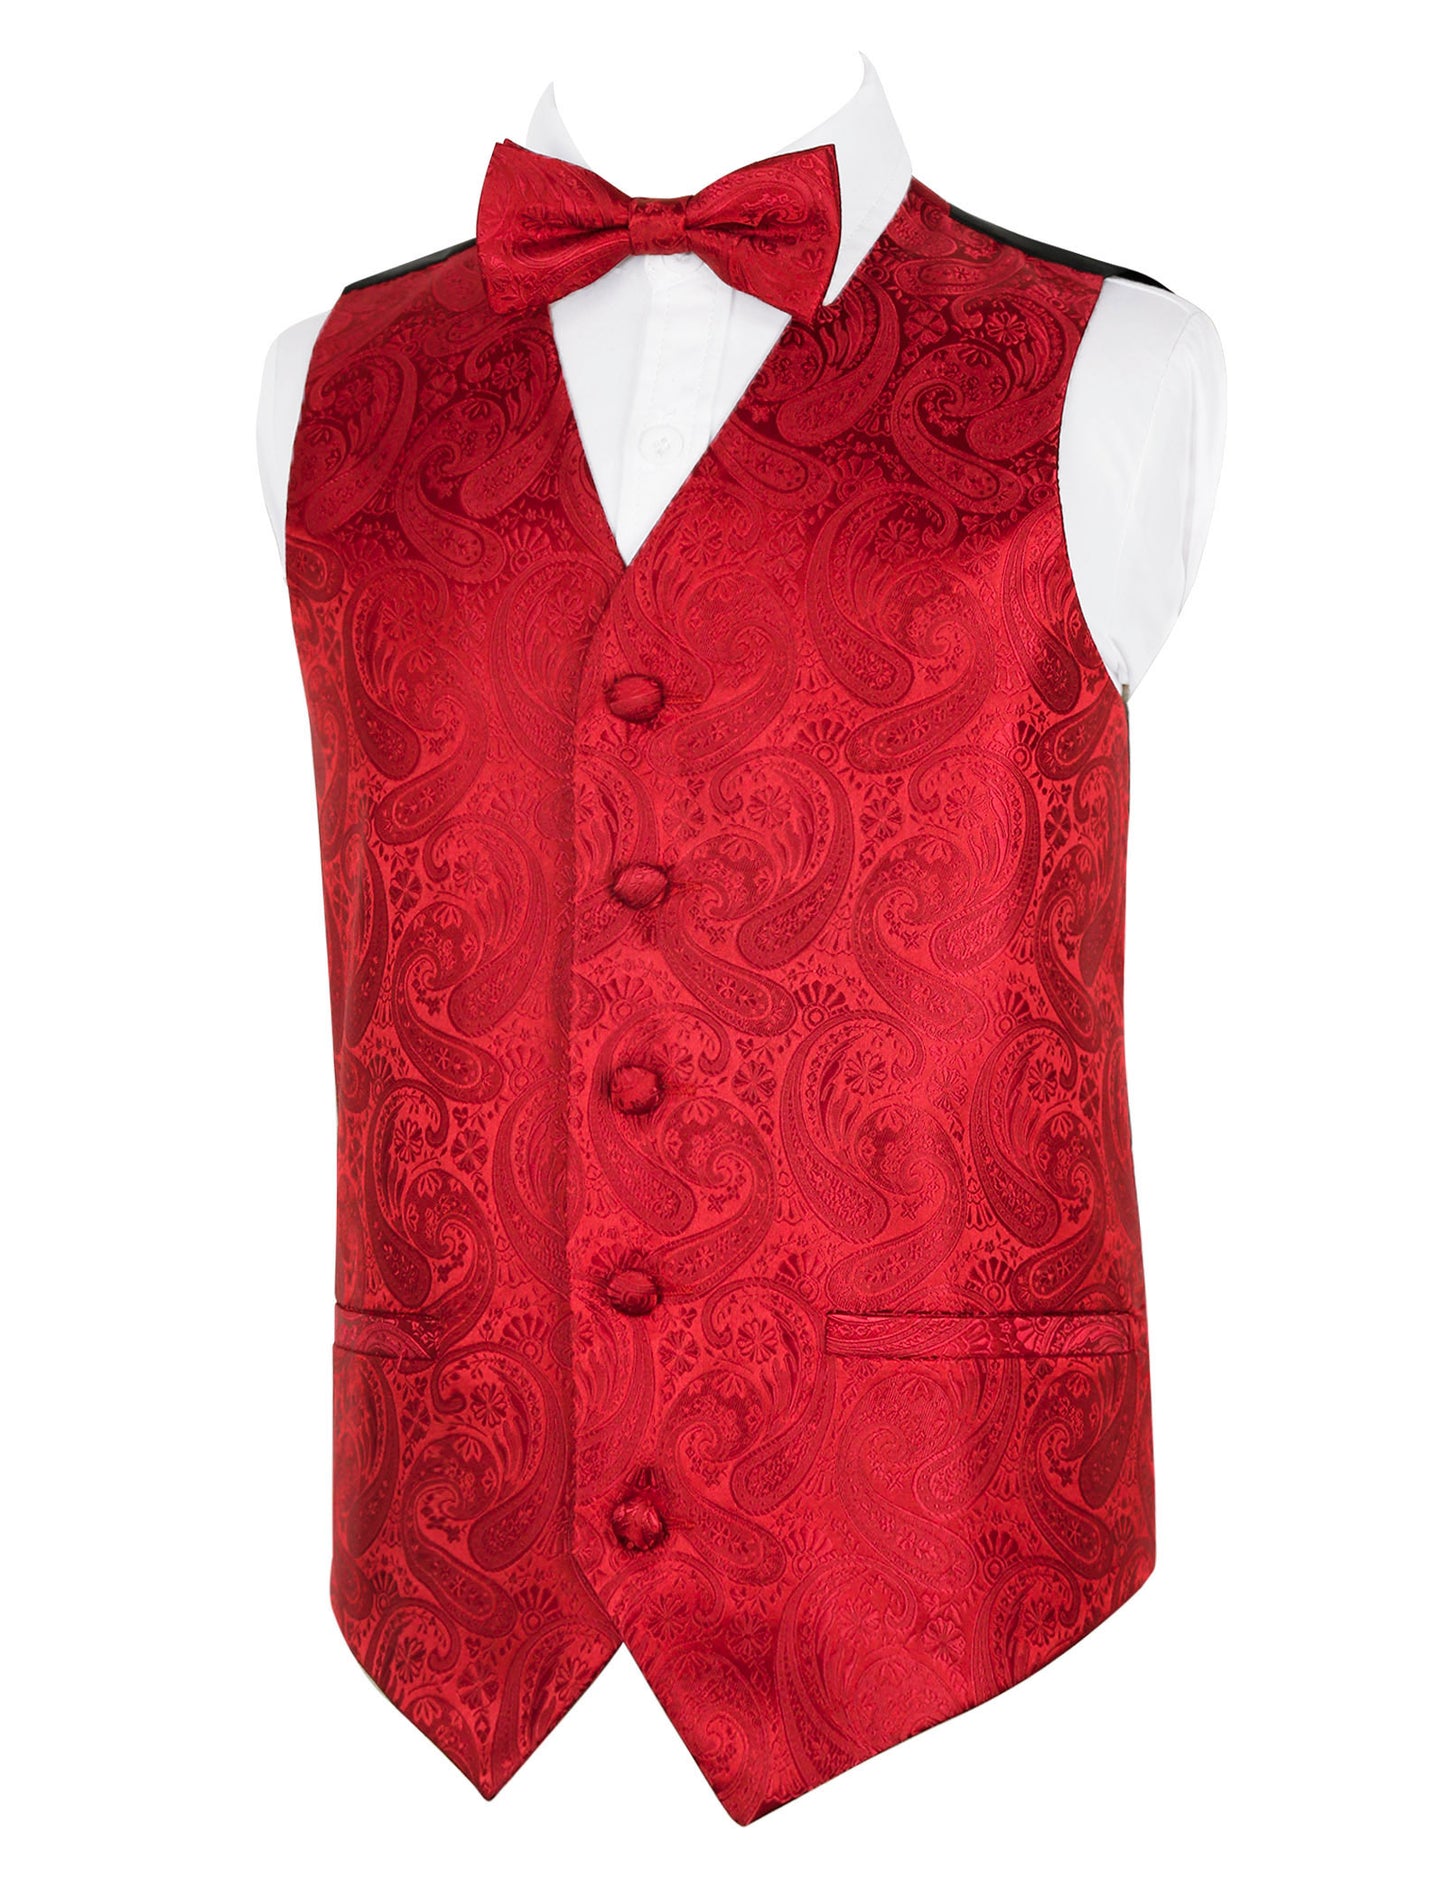 Boy's Paisley Jacquard Pre-Tied Bow Tie with Classic Floral Dress Suit Vest Set, 077-Red